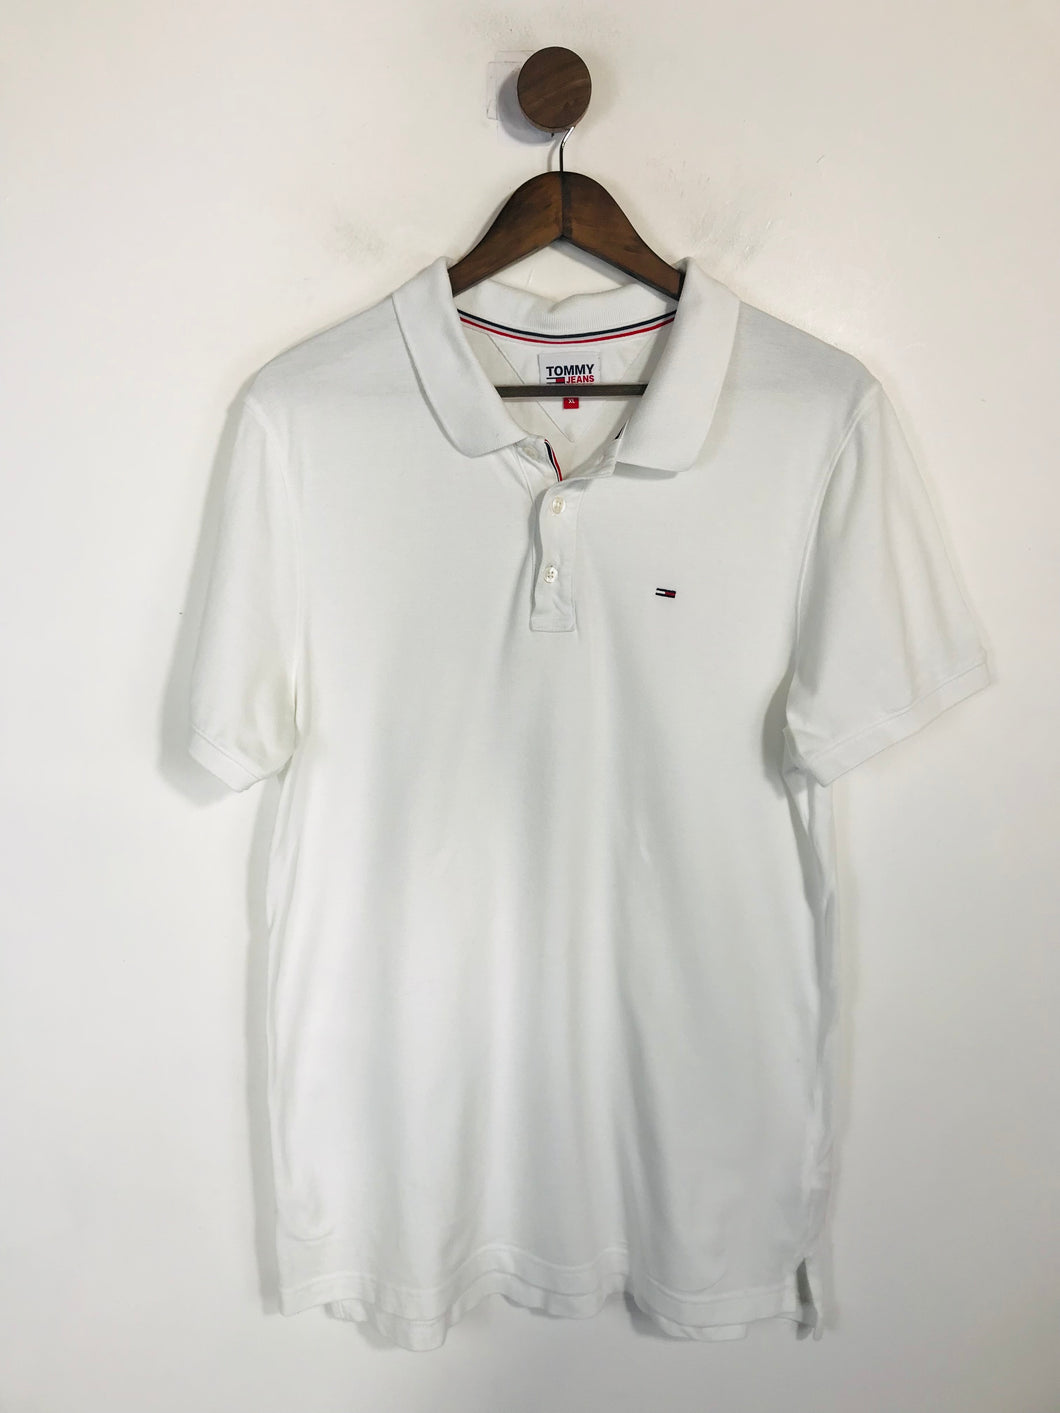 Tommy Jeans Women's Polo Shirt | XL UK16 | White